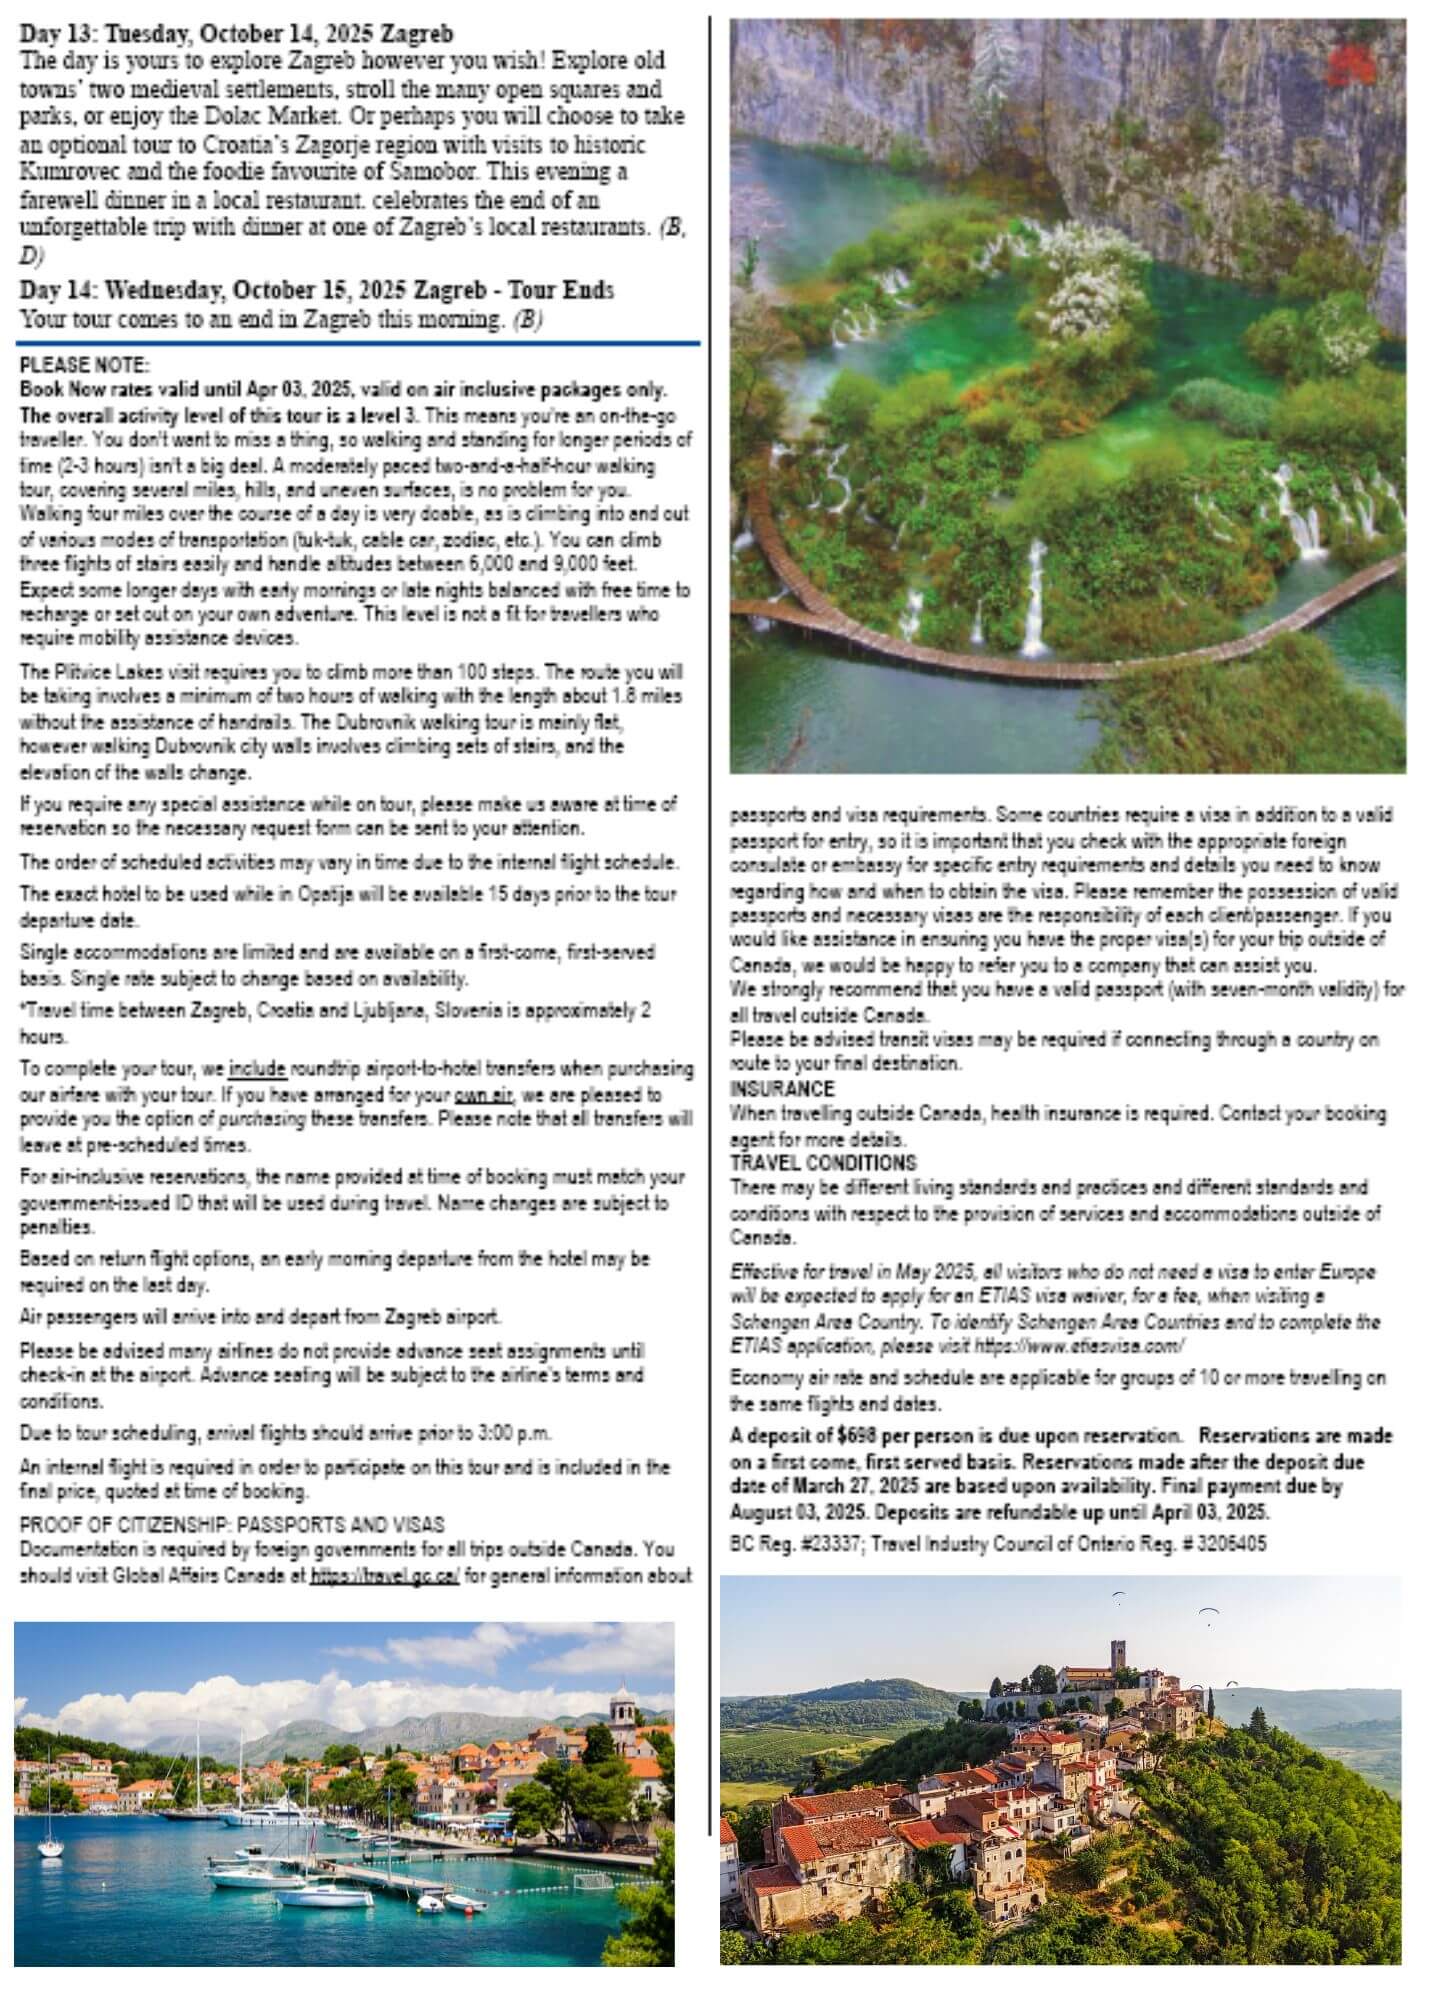 Croatia trip details page 2